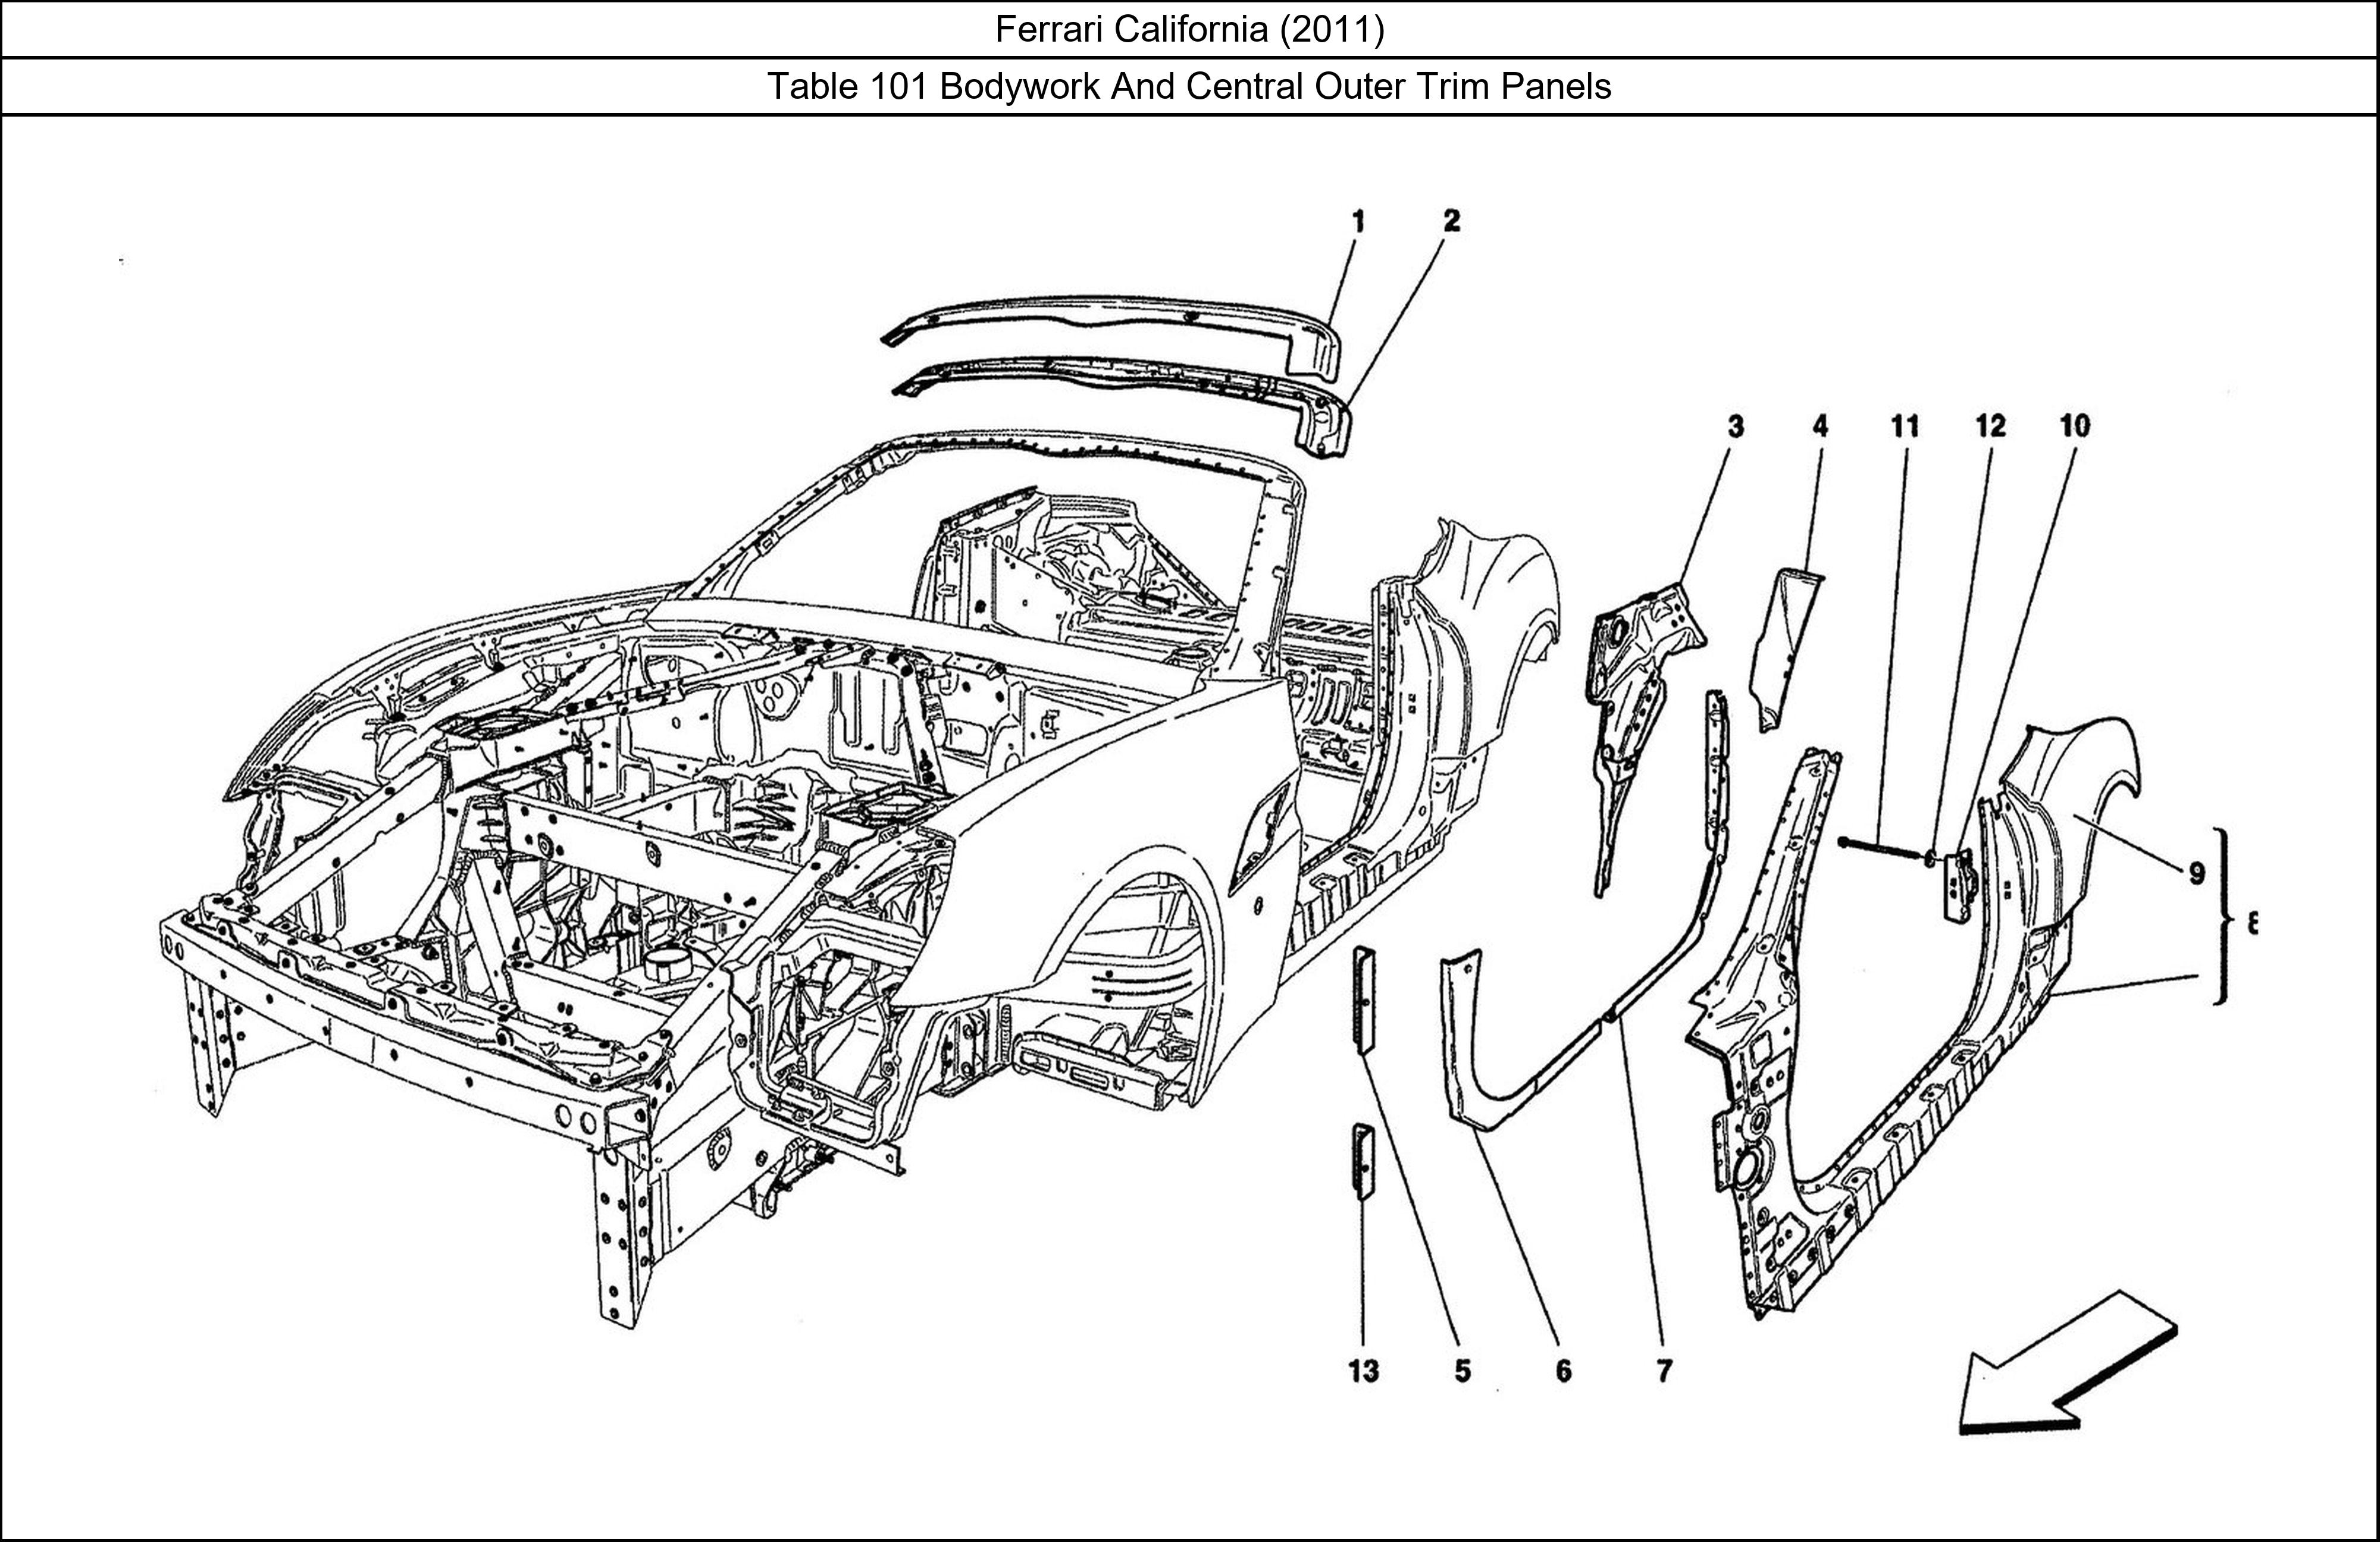 Ferrari Parts Ferrari California (2011) Table 101 Bodywork And Central Outer Trim Panels